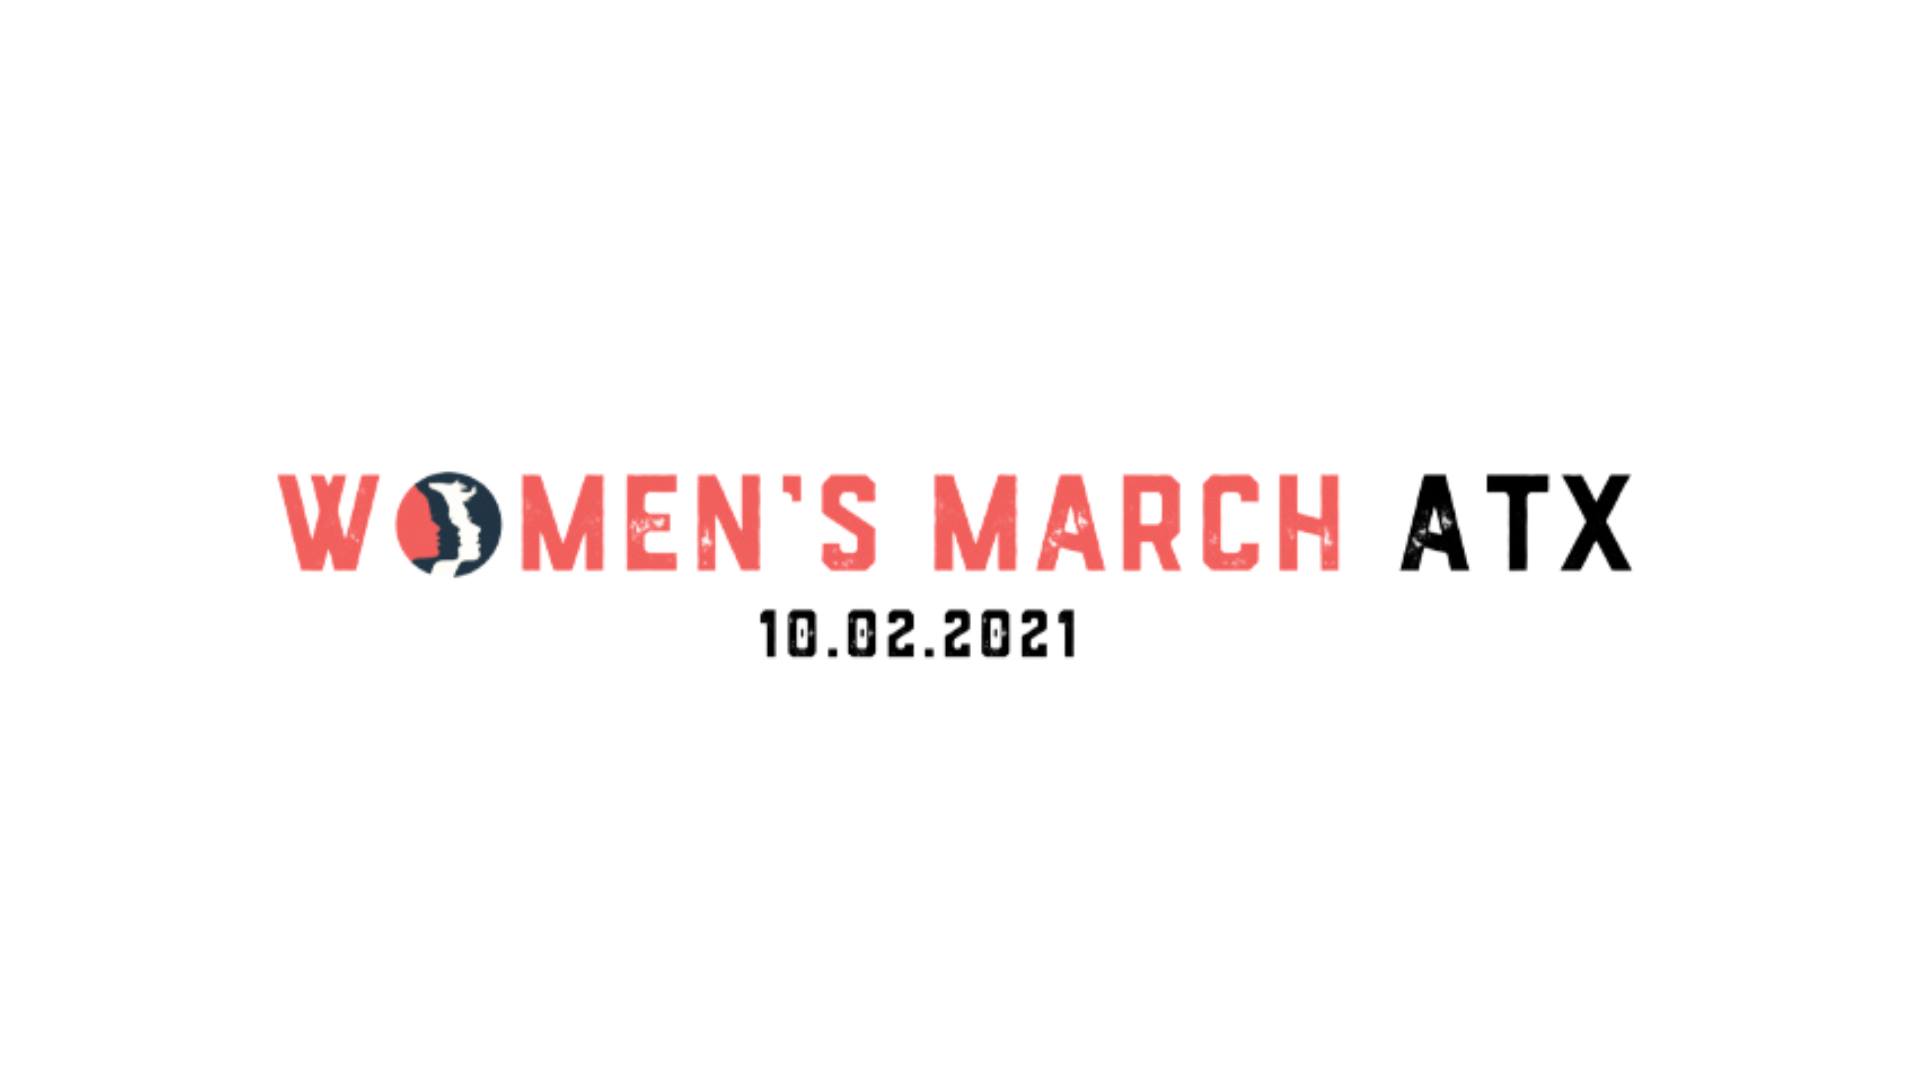 Womens March ATX